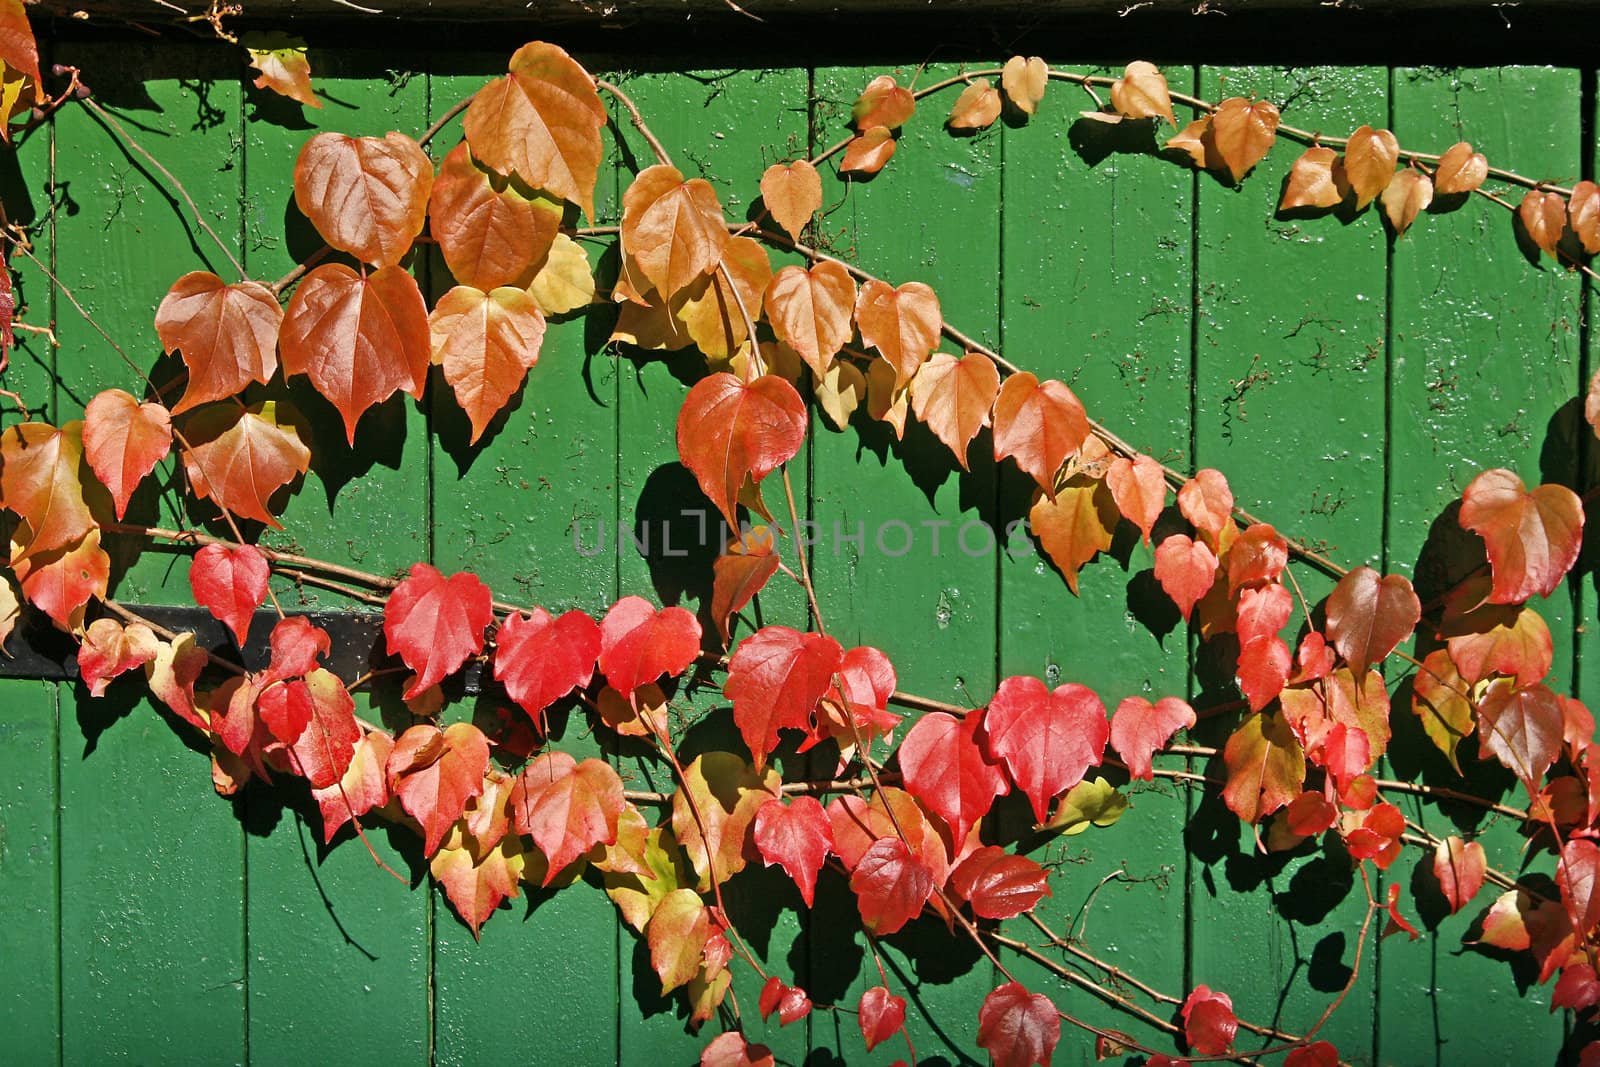 Parthenocissus leaves on autumn by Natureandmore